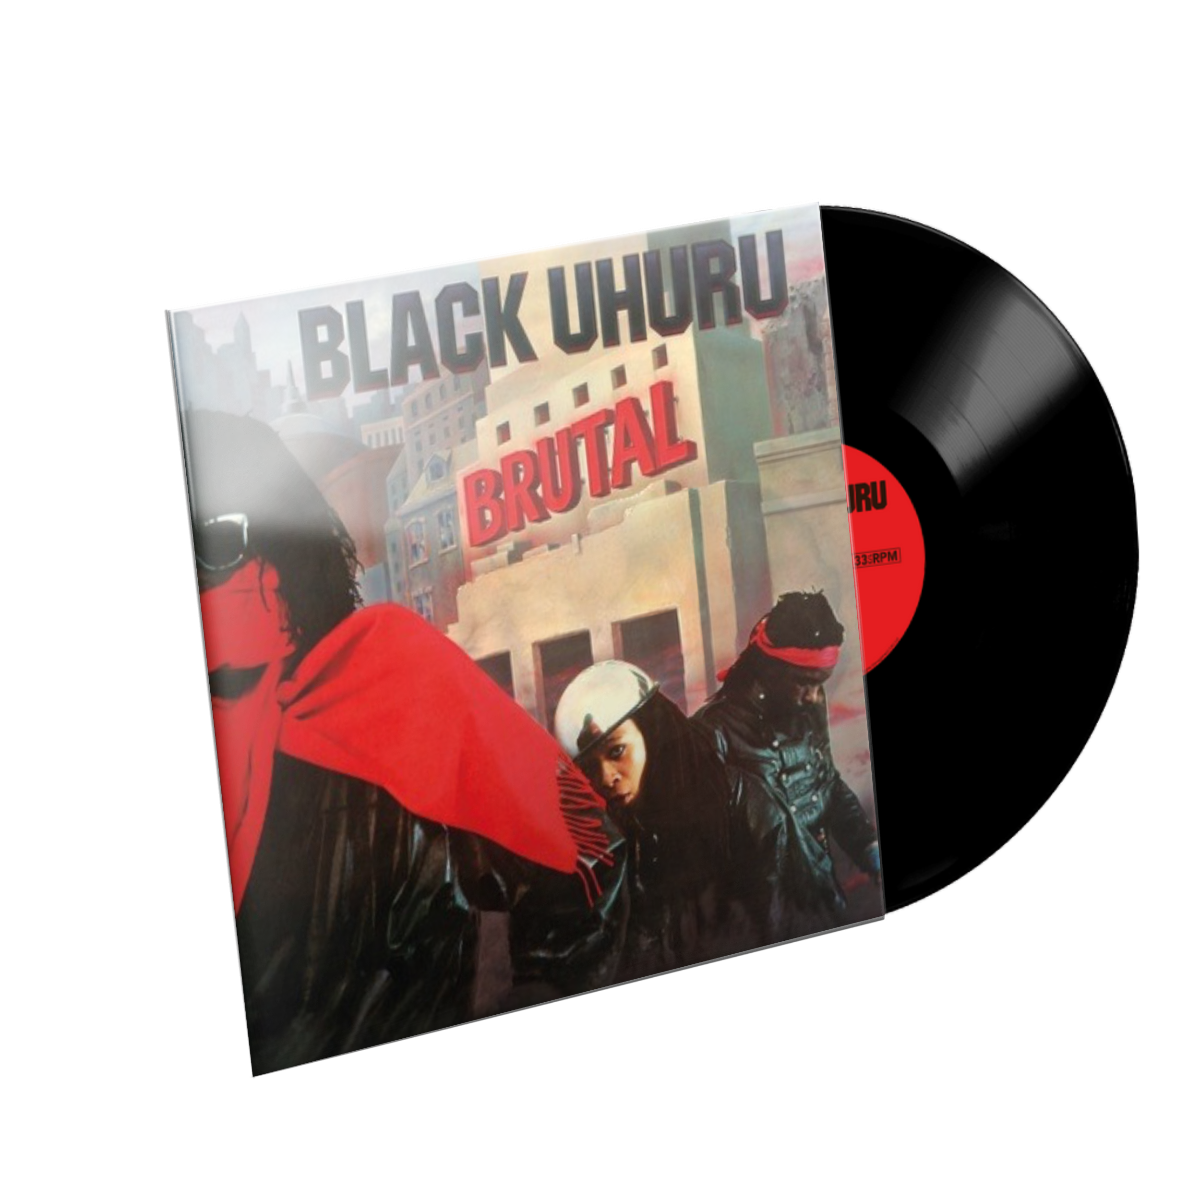 Black Uhuru - Brutal: Vinyl LP